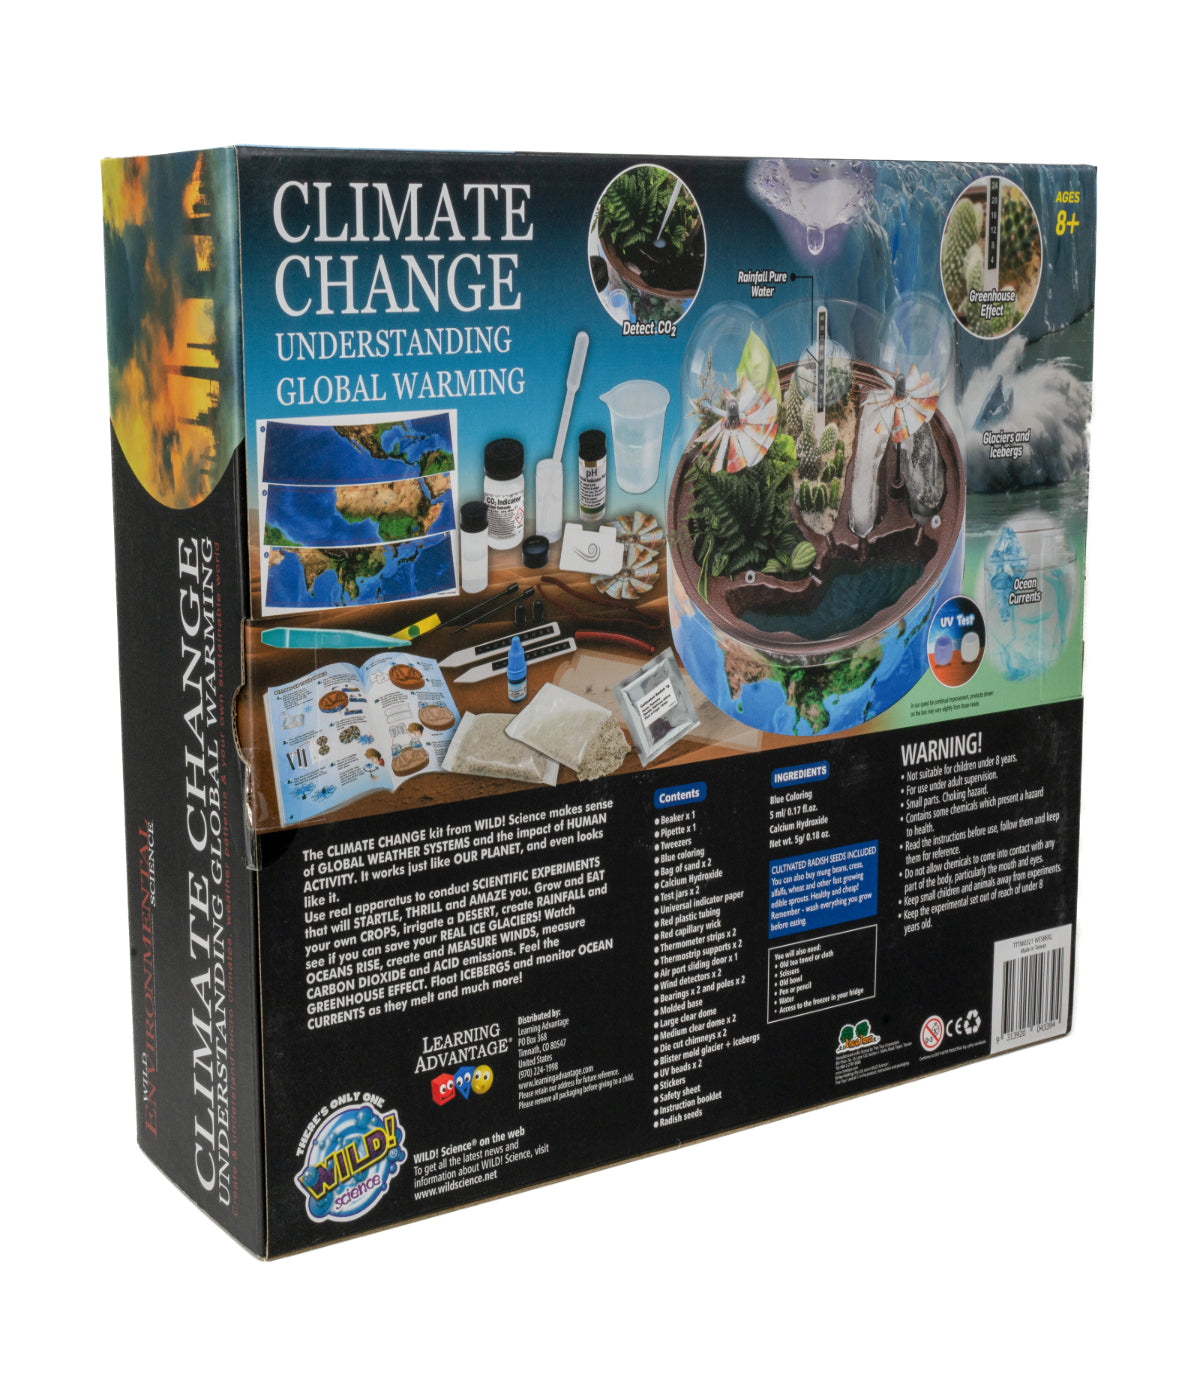 Wild Environmental Science - Climate Change: Understanding Global Warming Multi